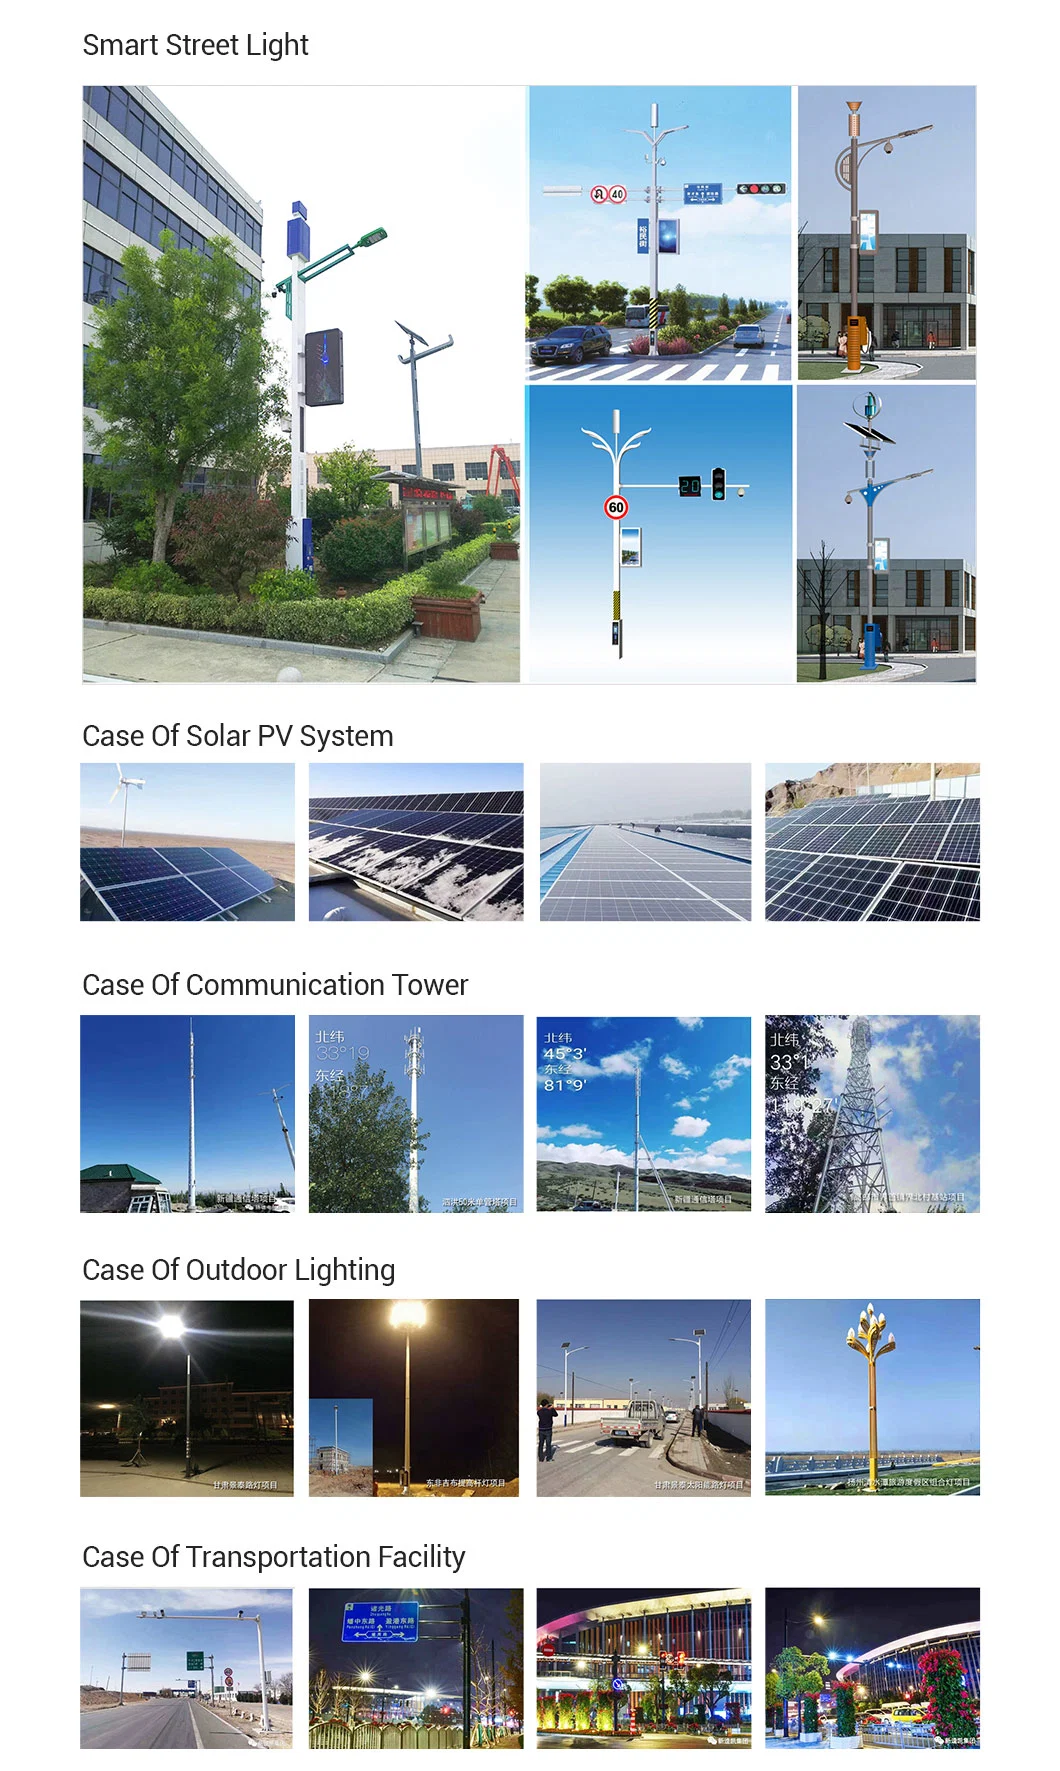 Complete Set Solar Panel Kits 5 Kw off Grid Solar Power System Solar System Kit